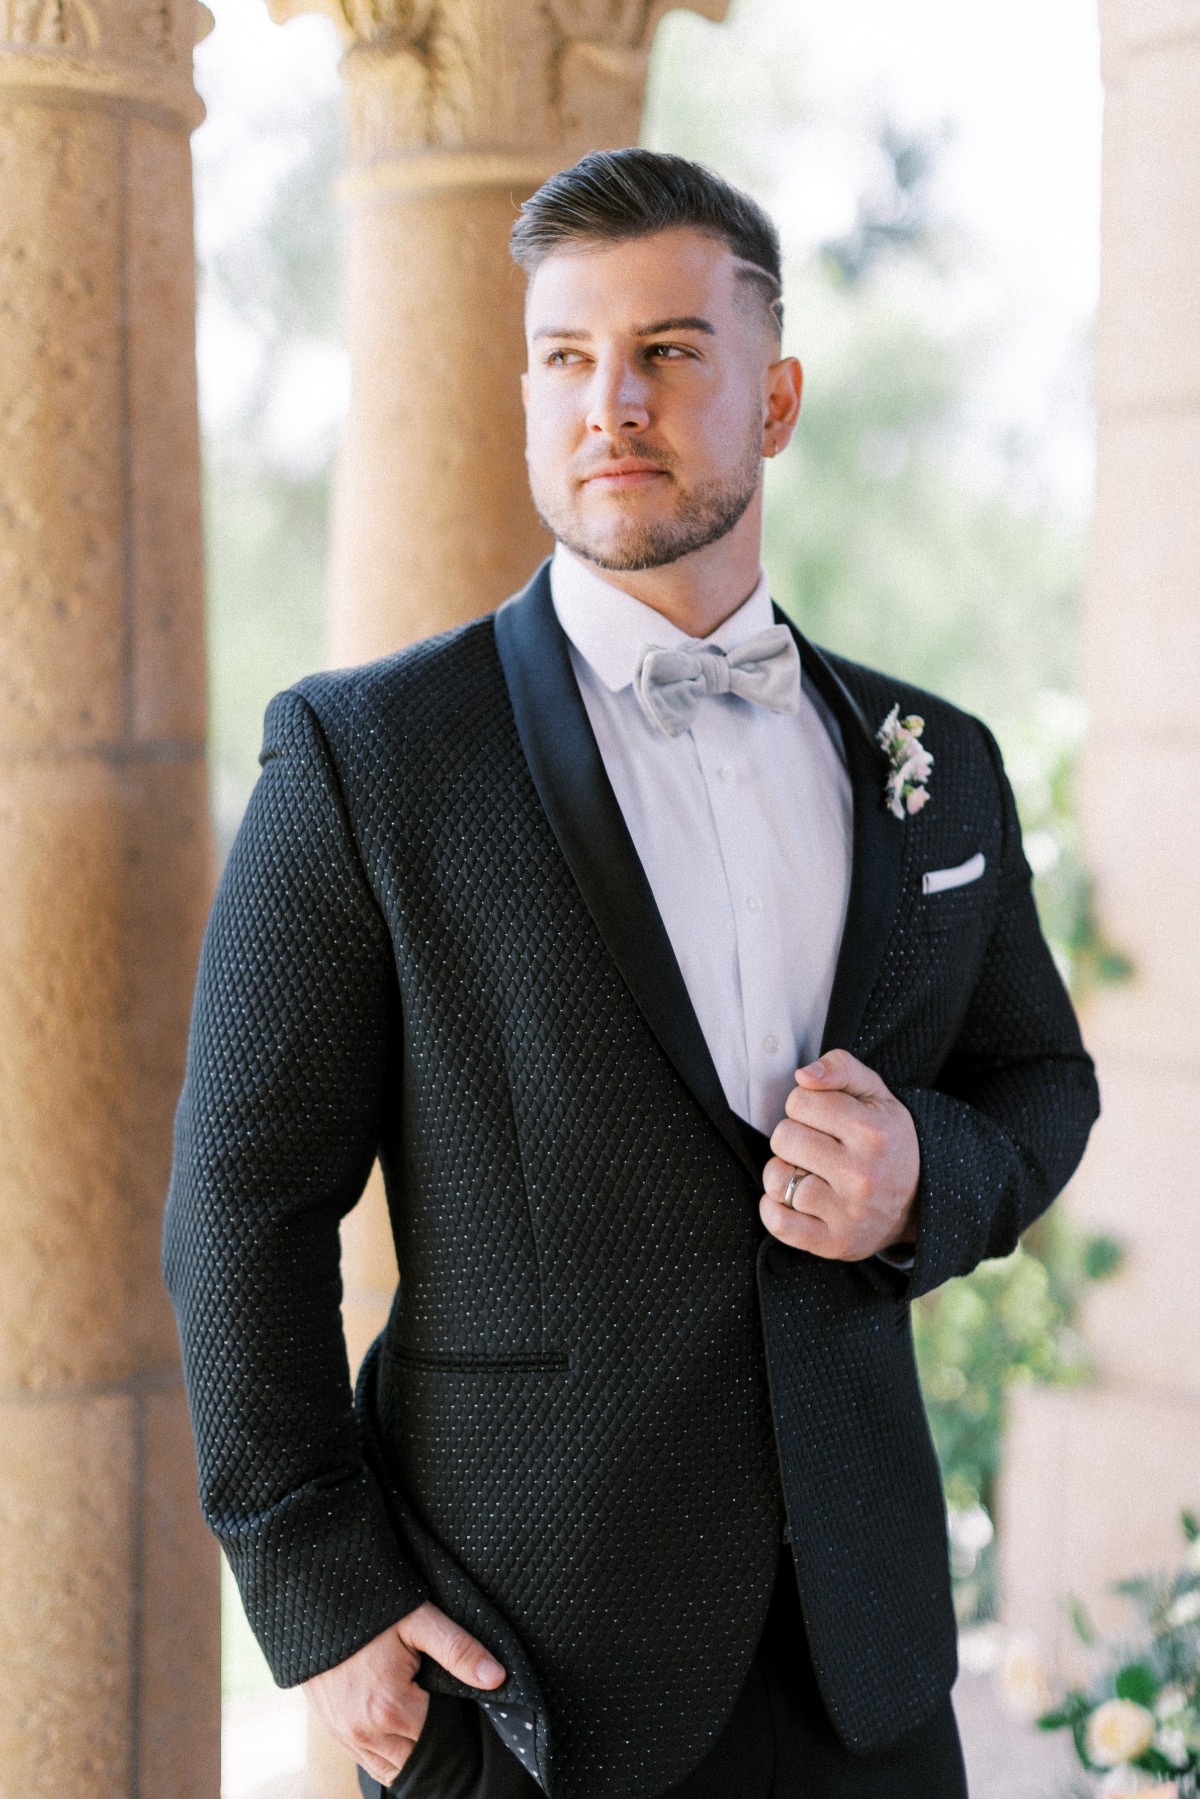 Portrait of groom